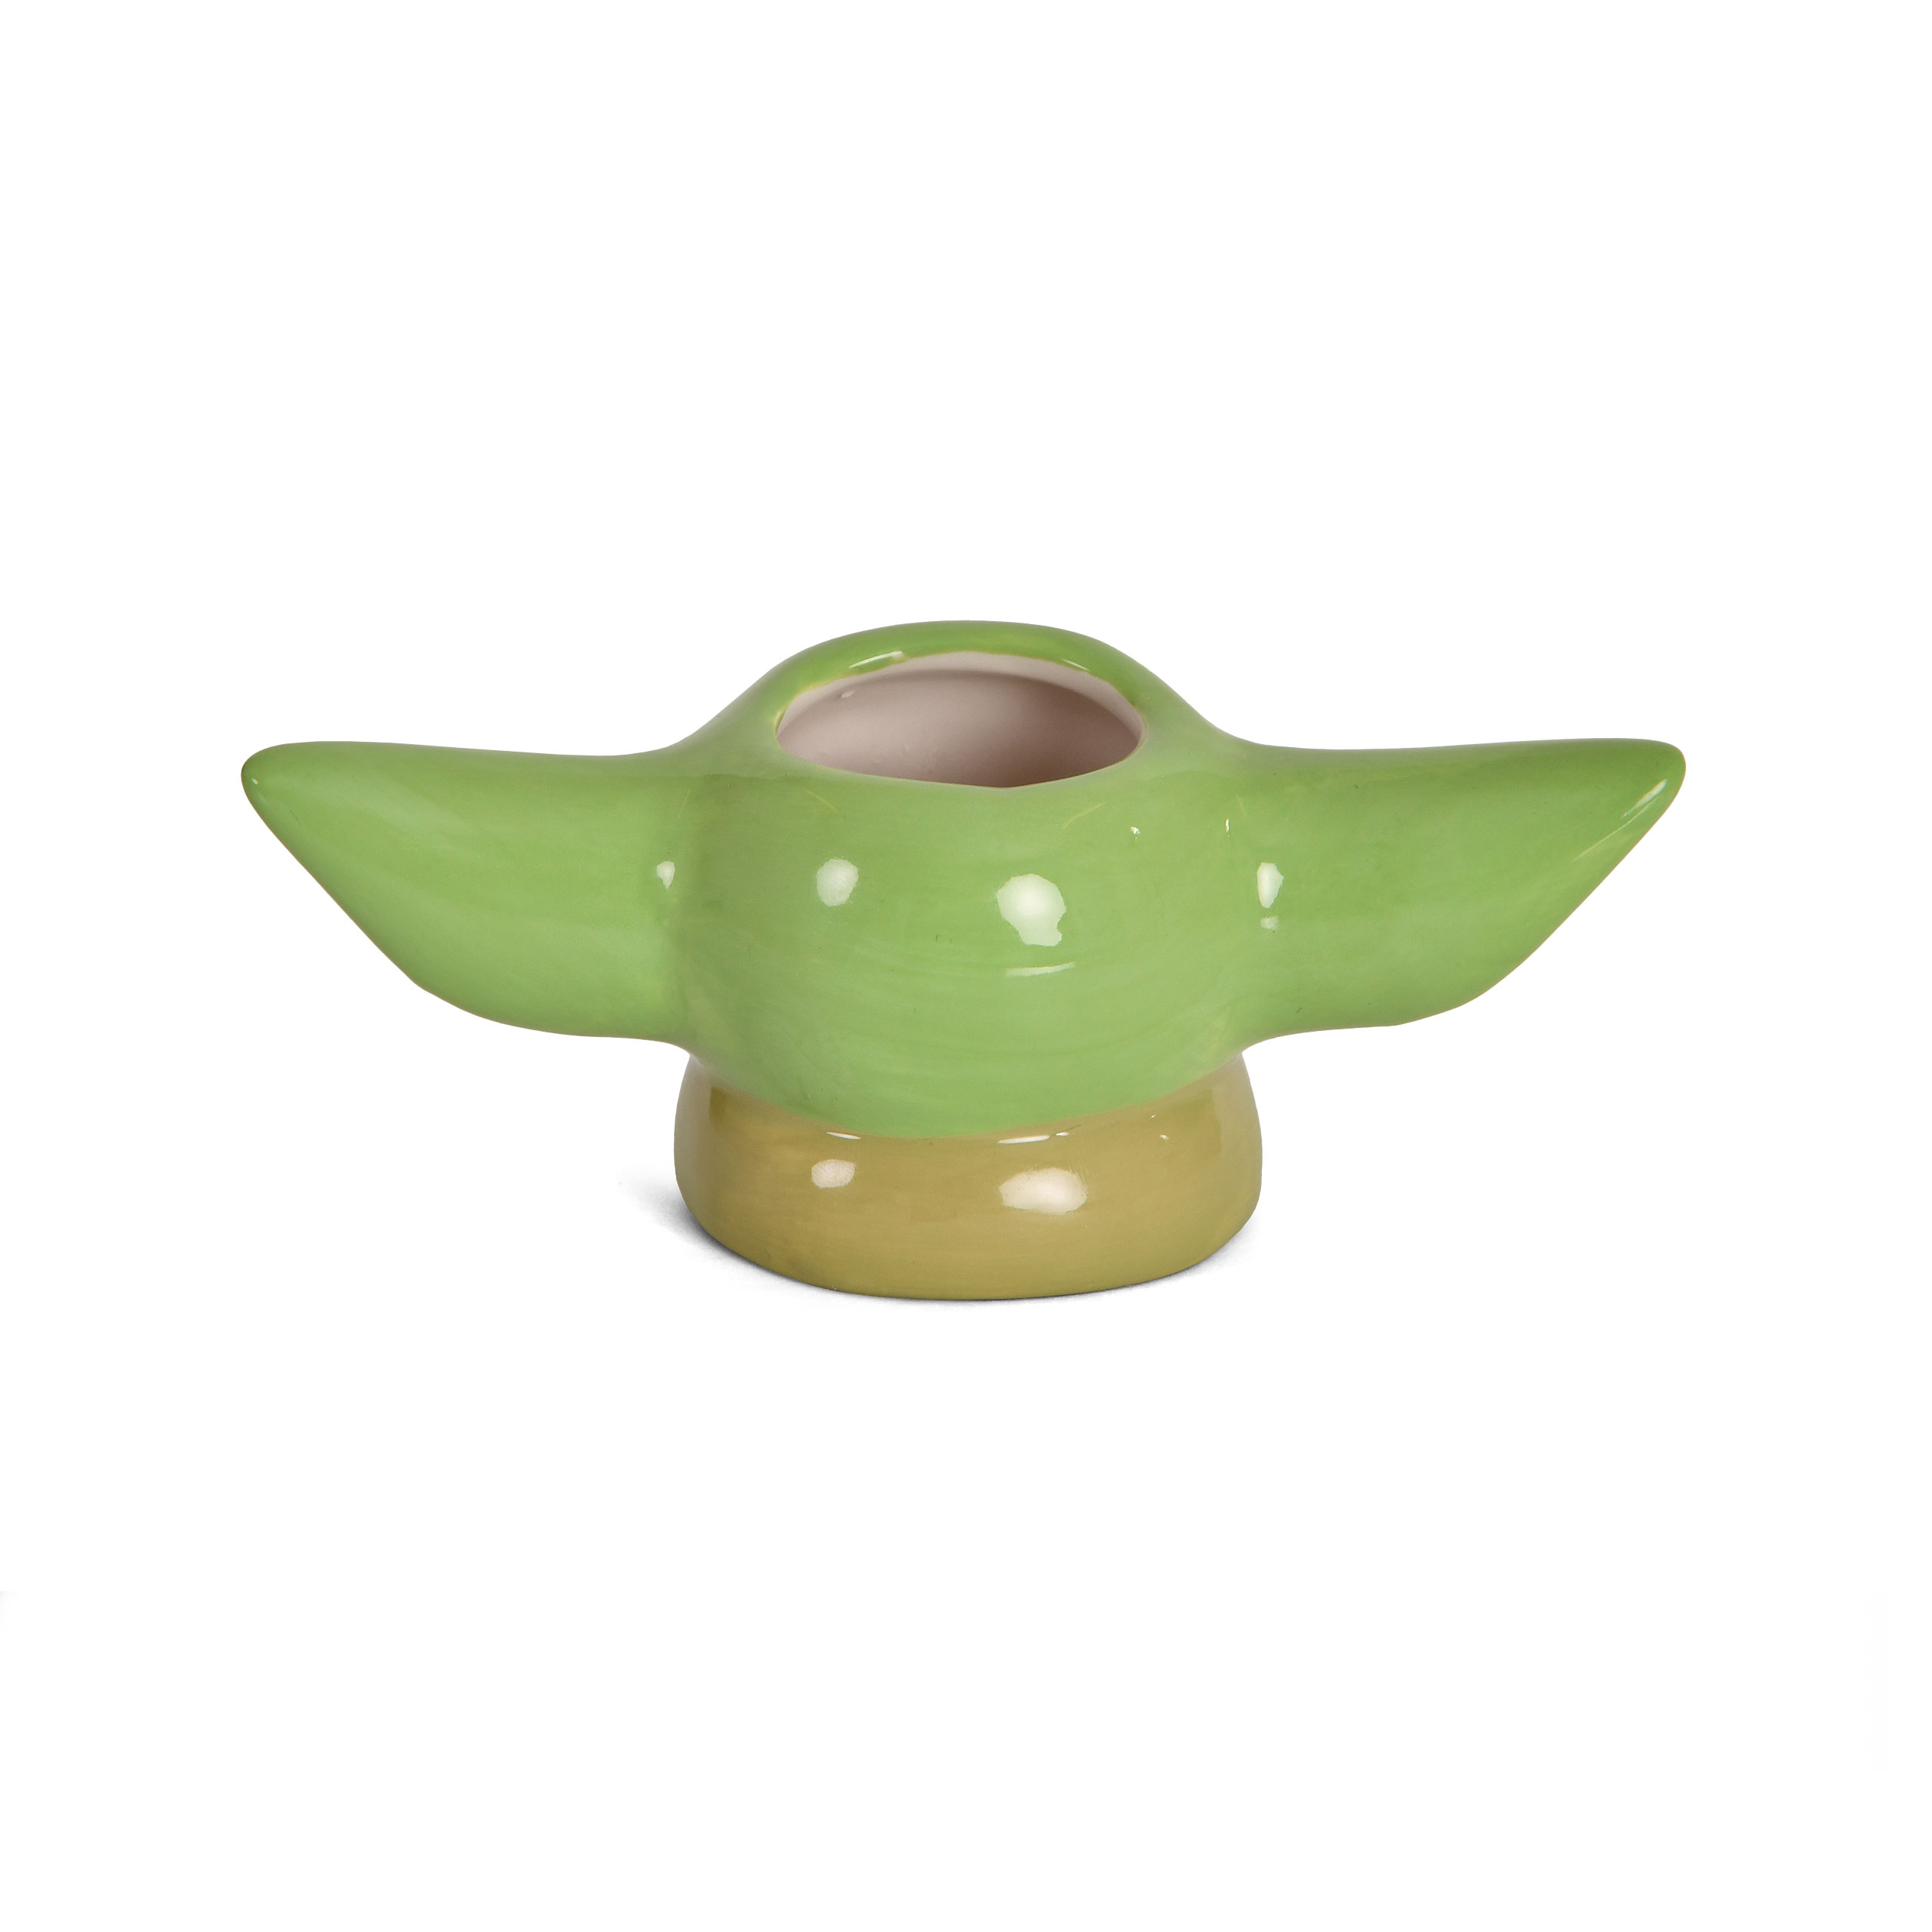 Grogu 3D Espresso Cup - Star Wars The Mandalorian